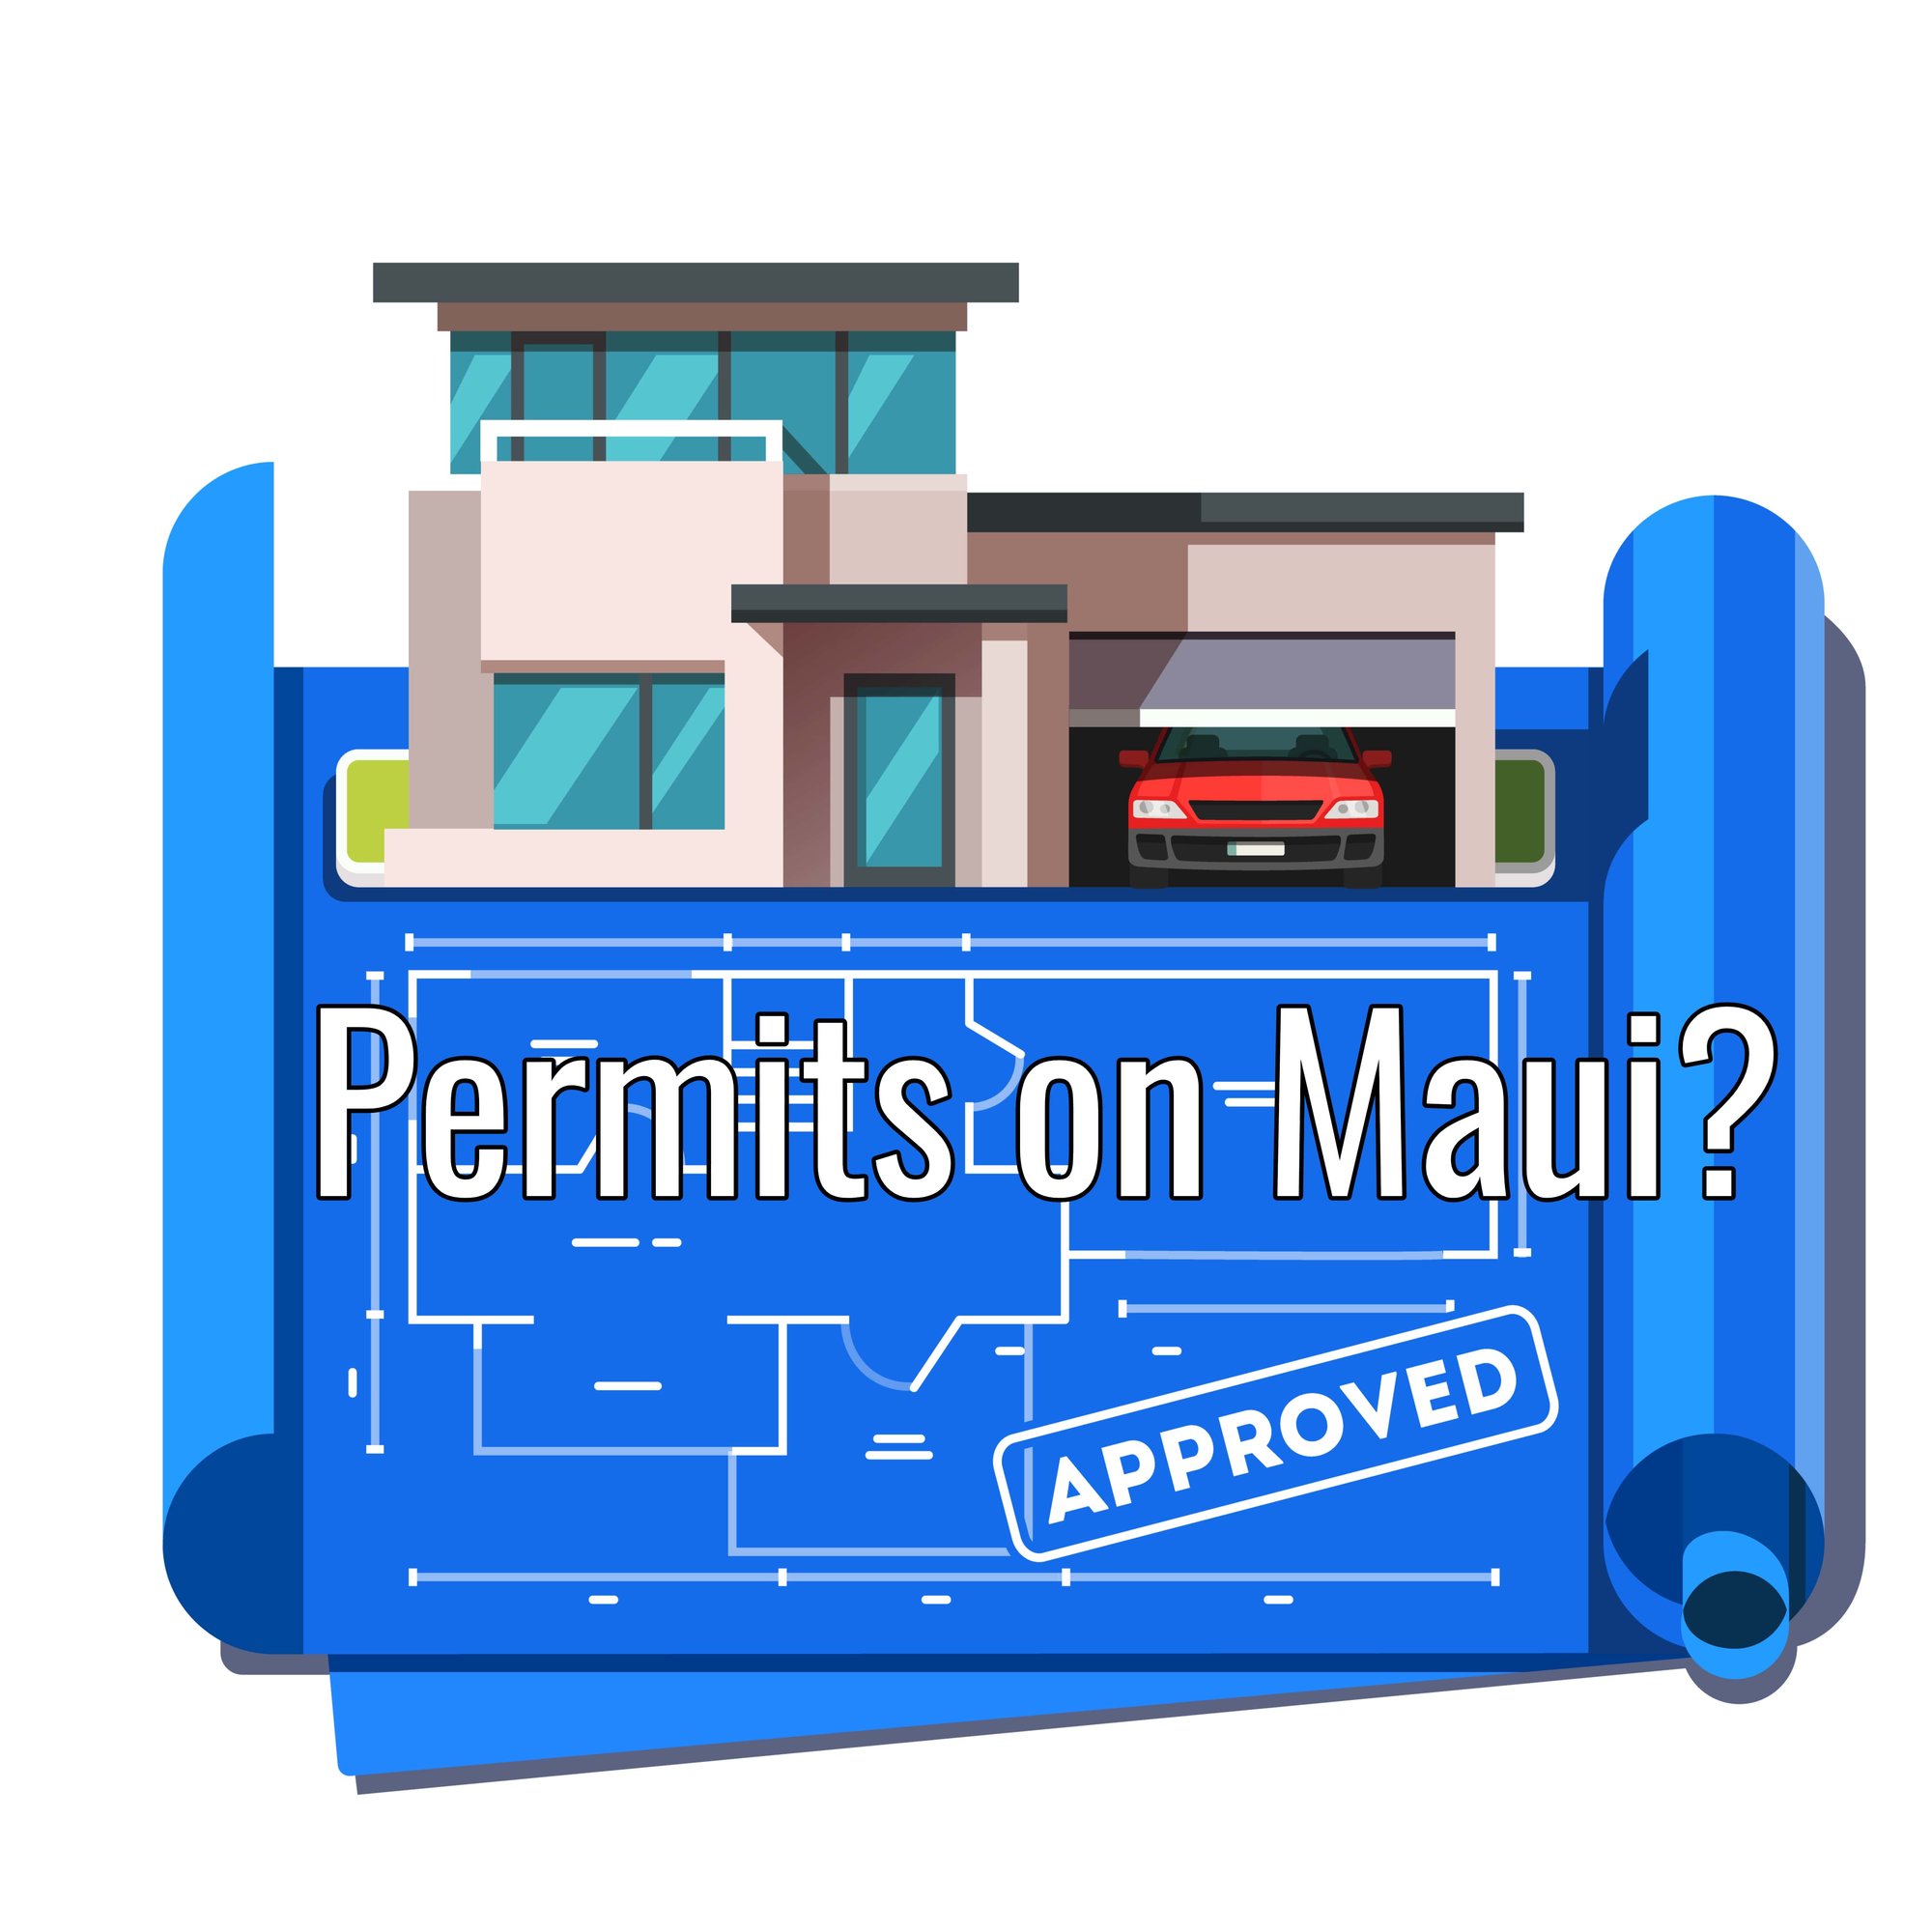 Maui Permits for Construction